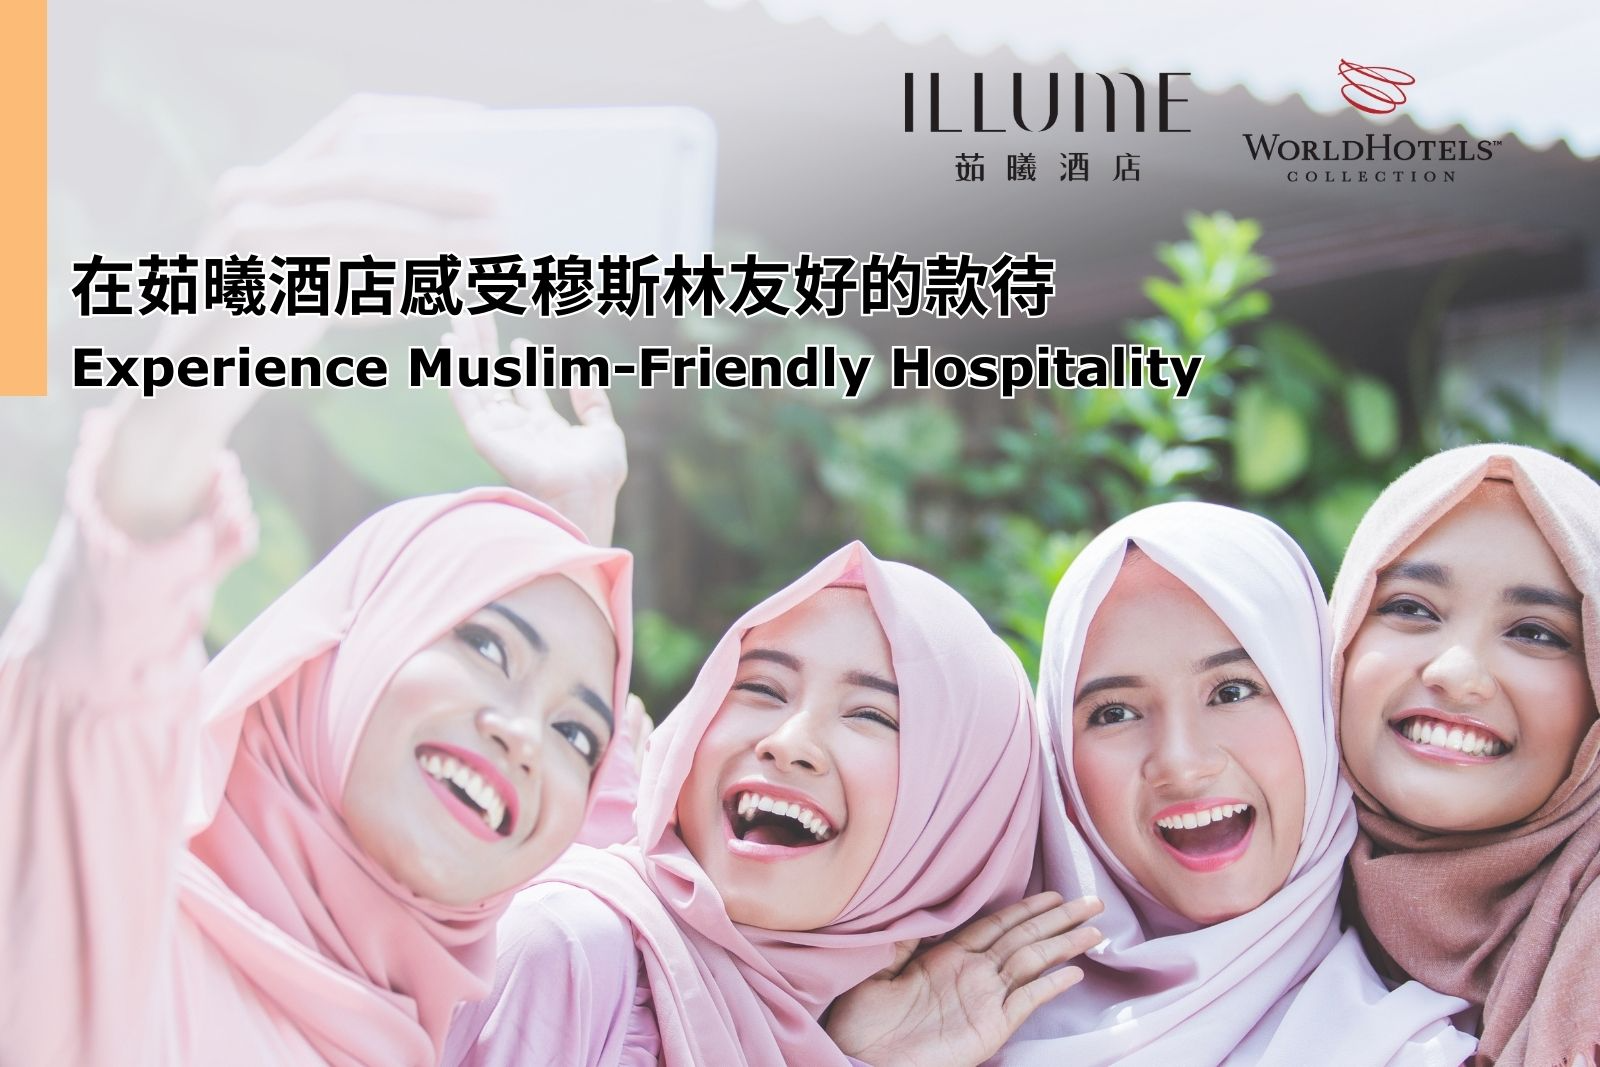 Illuminate Your Stay: Experience Muslim-Friendly Hospitality at ILLUME TAIPEI